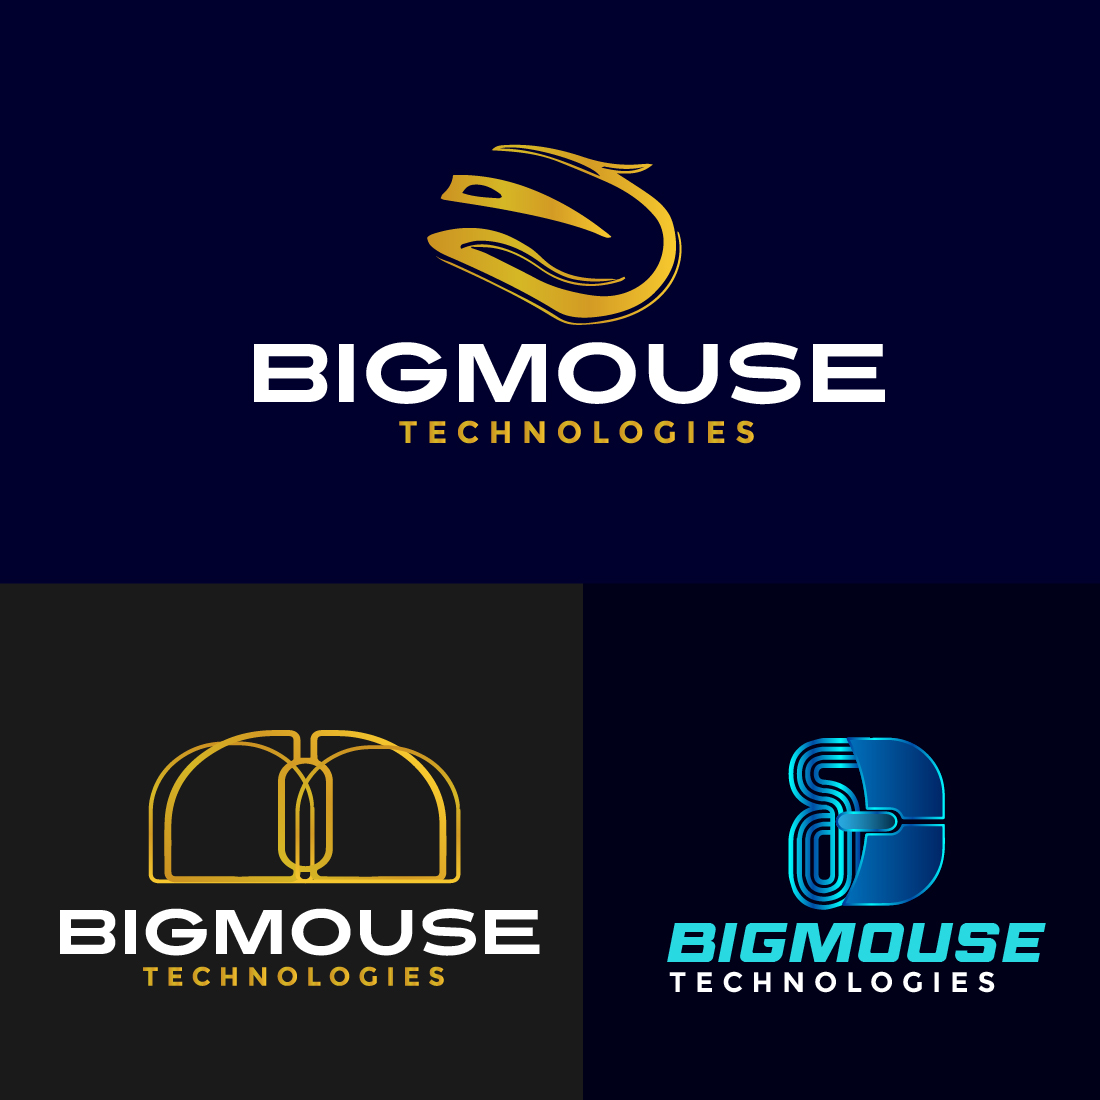 3 Unique Concepts of BigMouse Technologies Logo Design cover image.